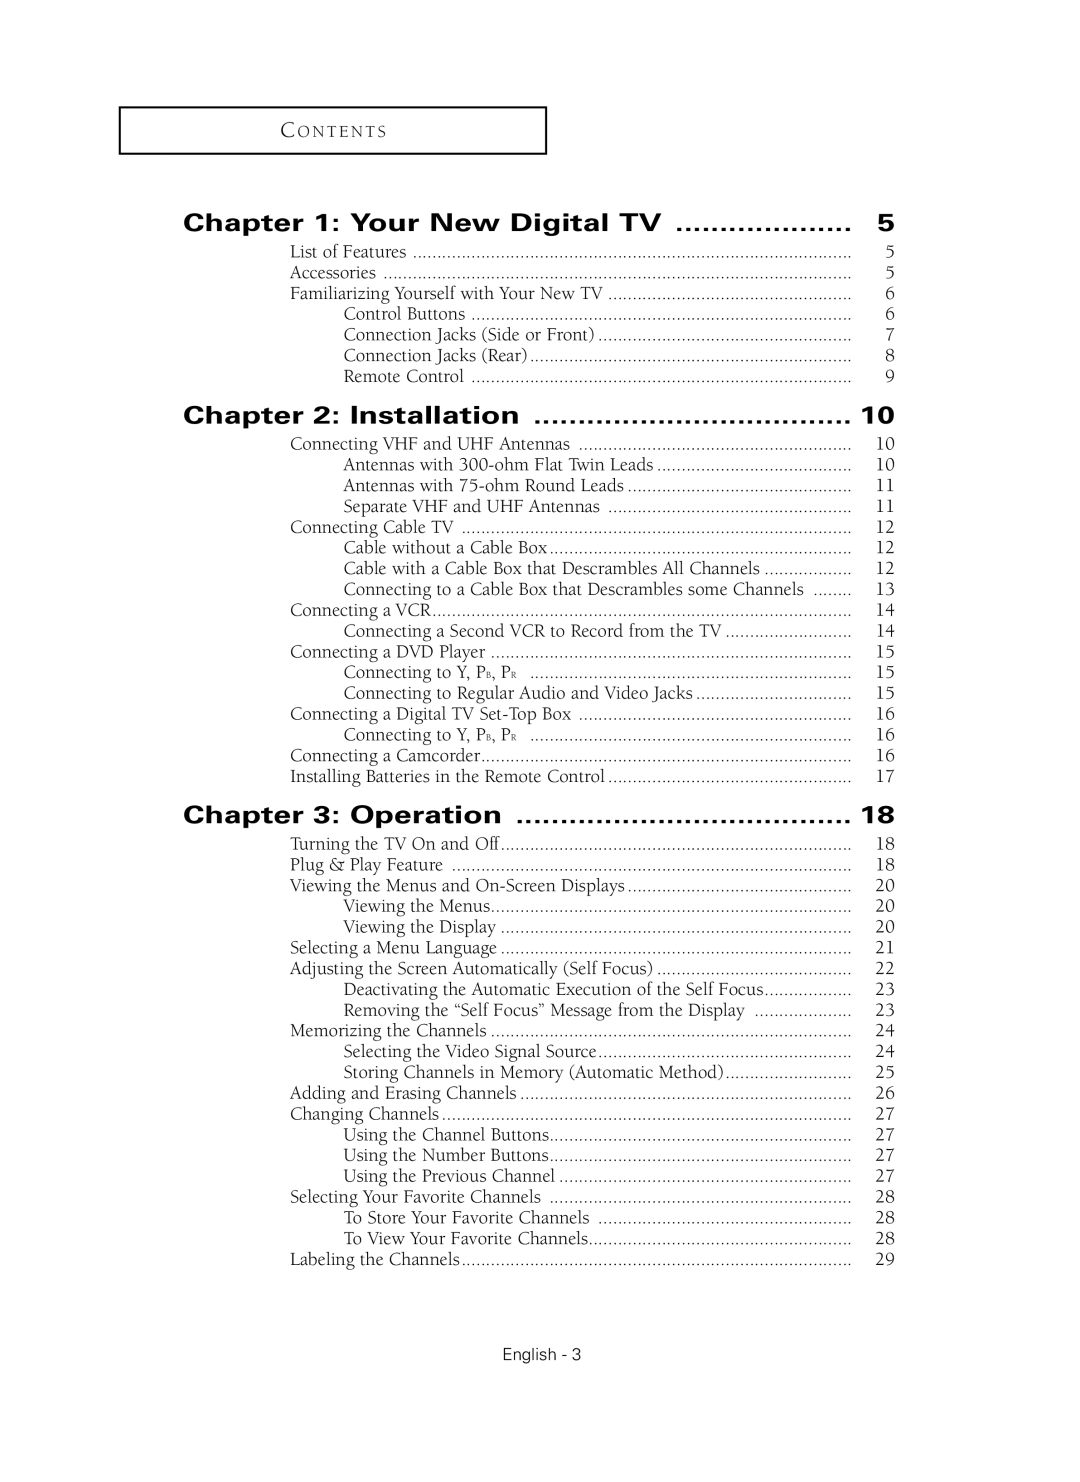 Samsung HC-P4241W manual Your New Digital TV, Installation, Operation, C O N T E N T S 